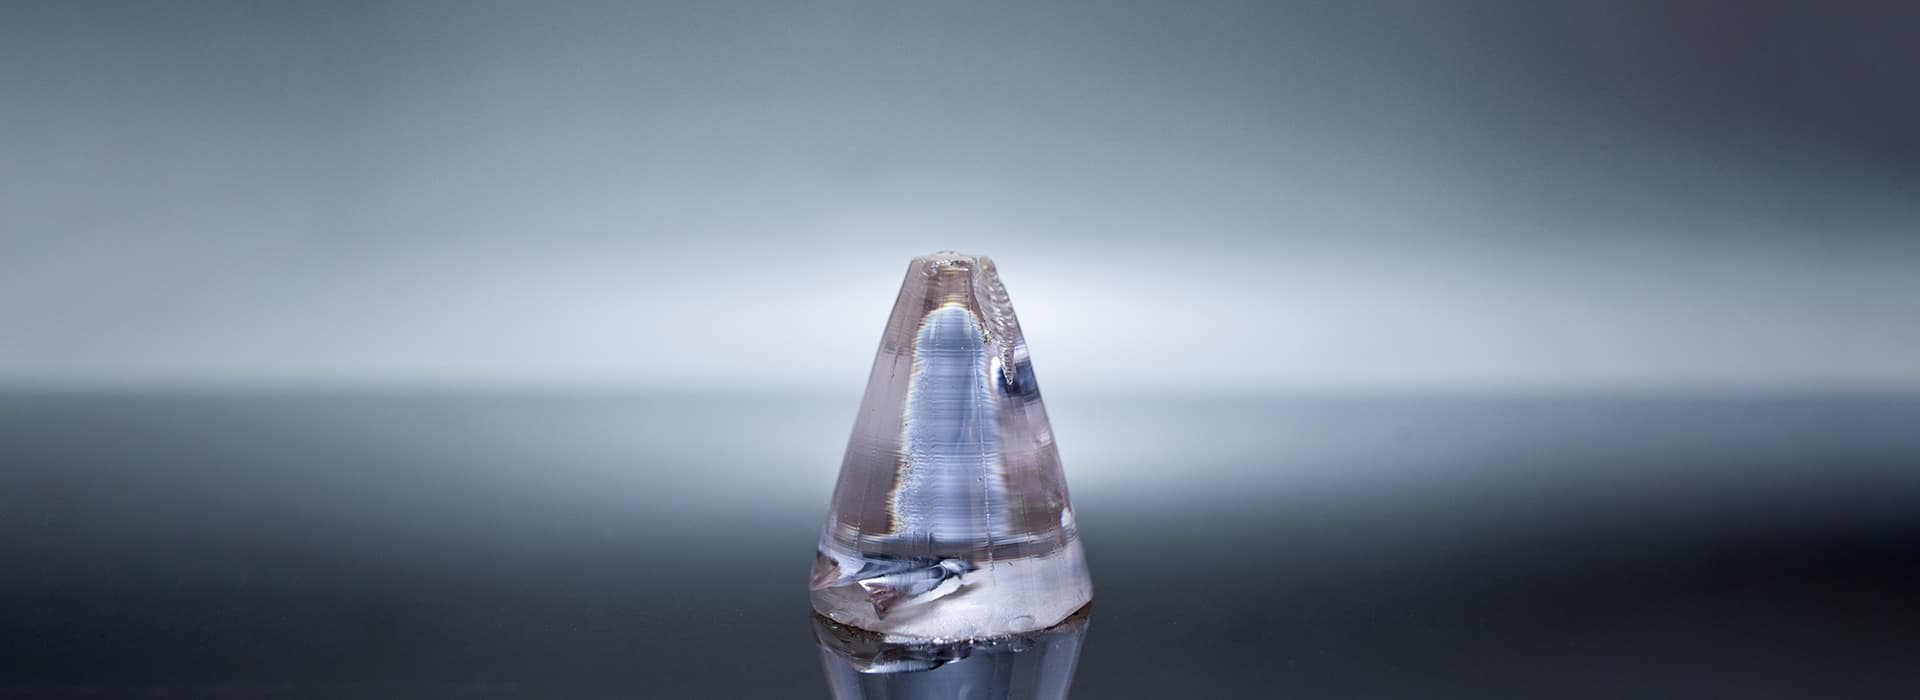 Nd YAG Laser Crystal |CRYLINK